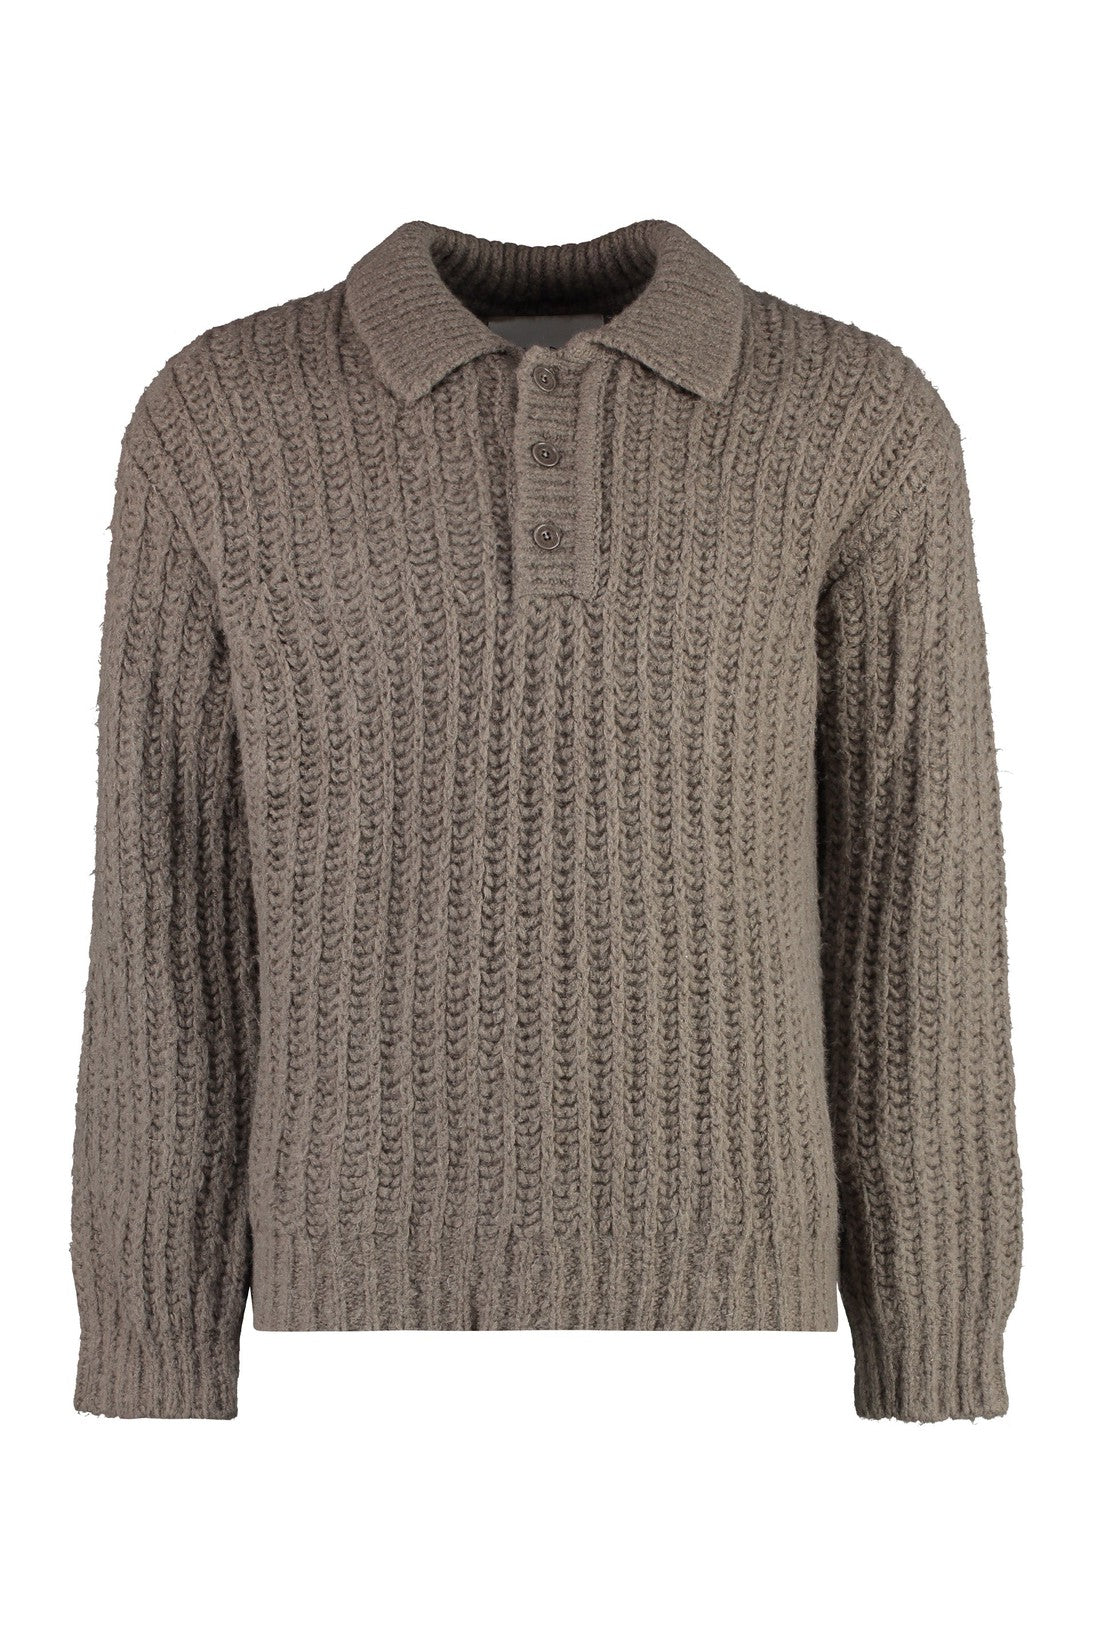 GANT-OUTLET-SALE-Wool-blend crew-neck sweater-ARCHIVIST